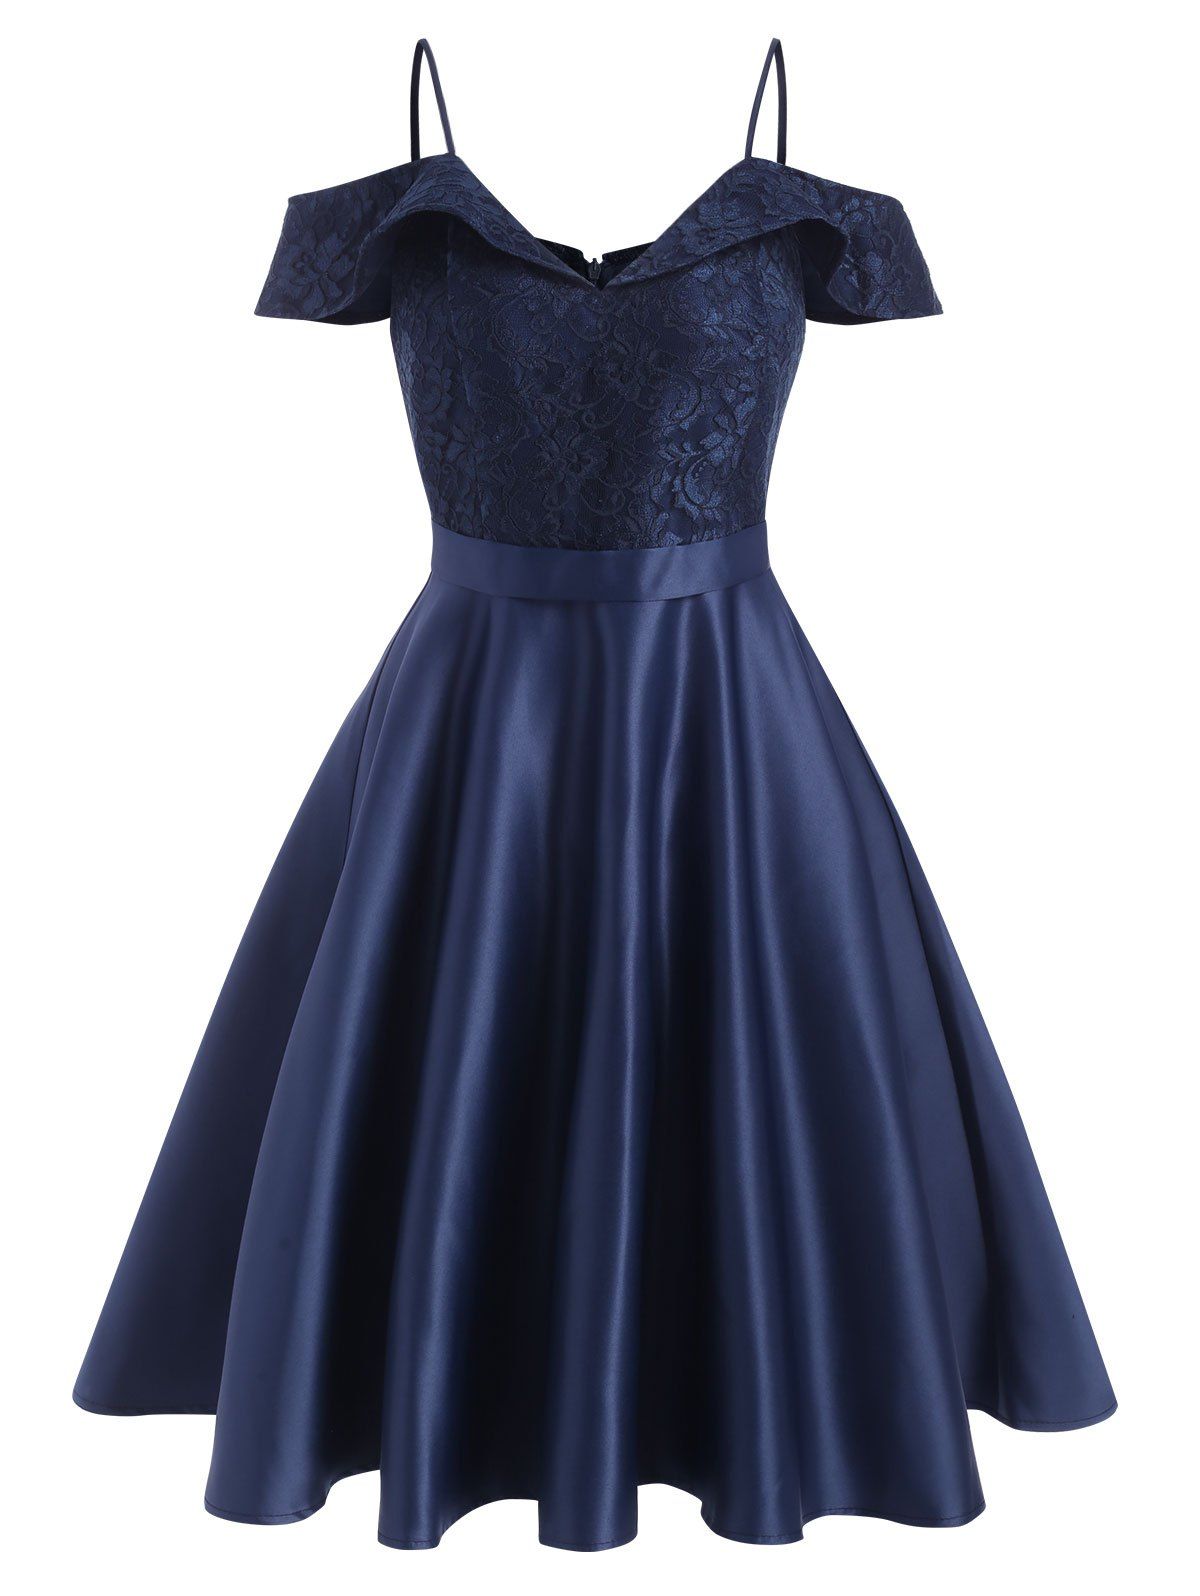 Flower Lace Cold Shoulder Foldover Cami Dress - DEEP BLUE L